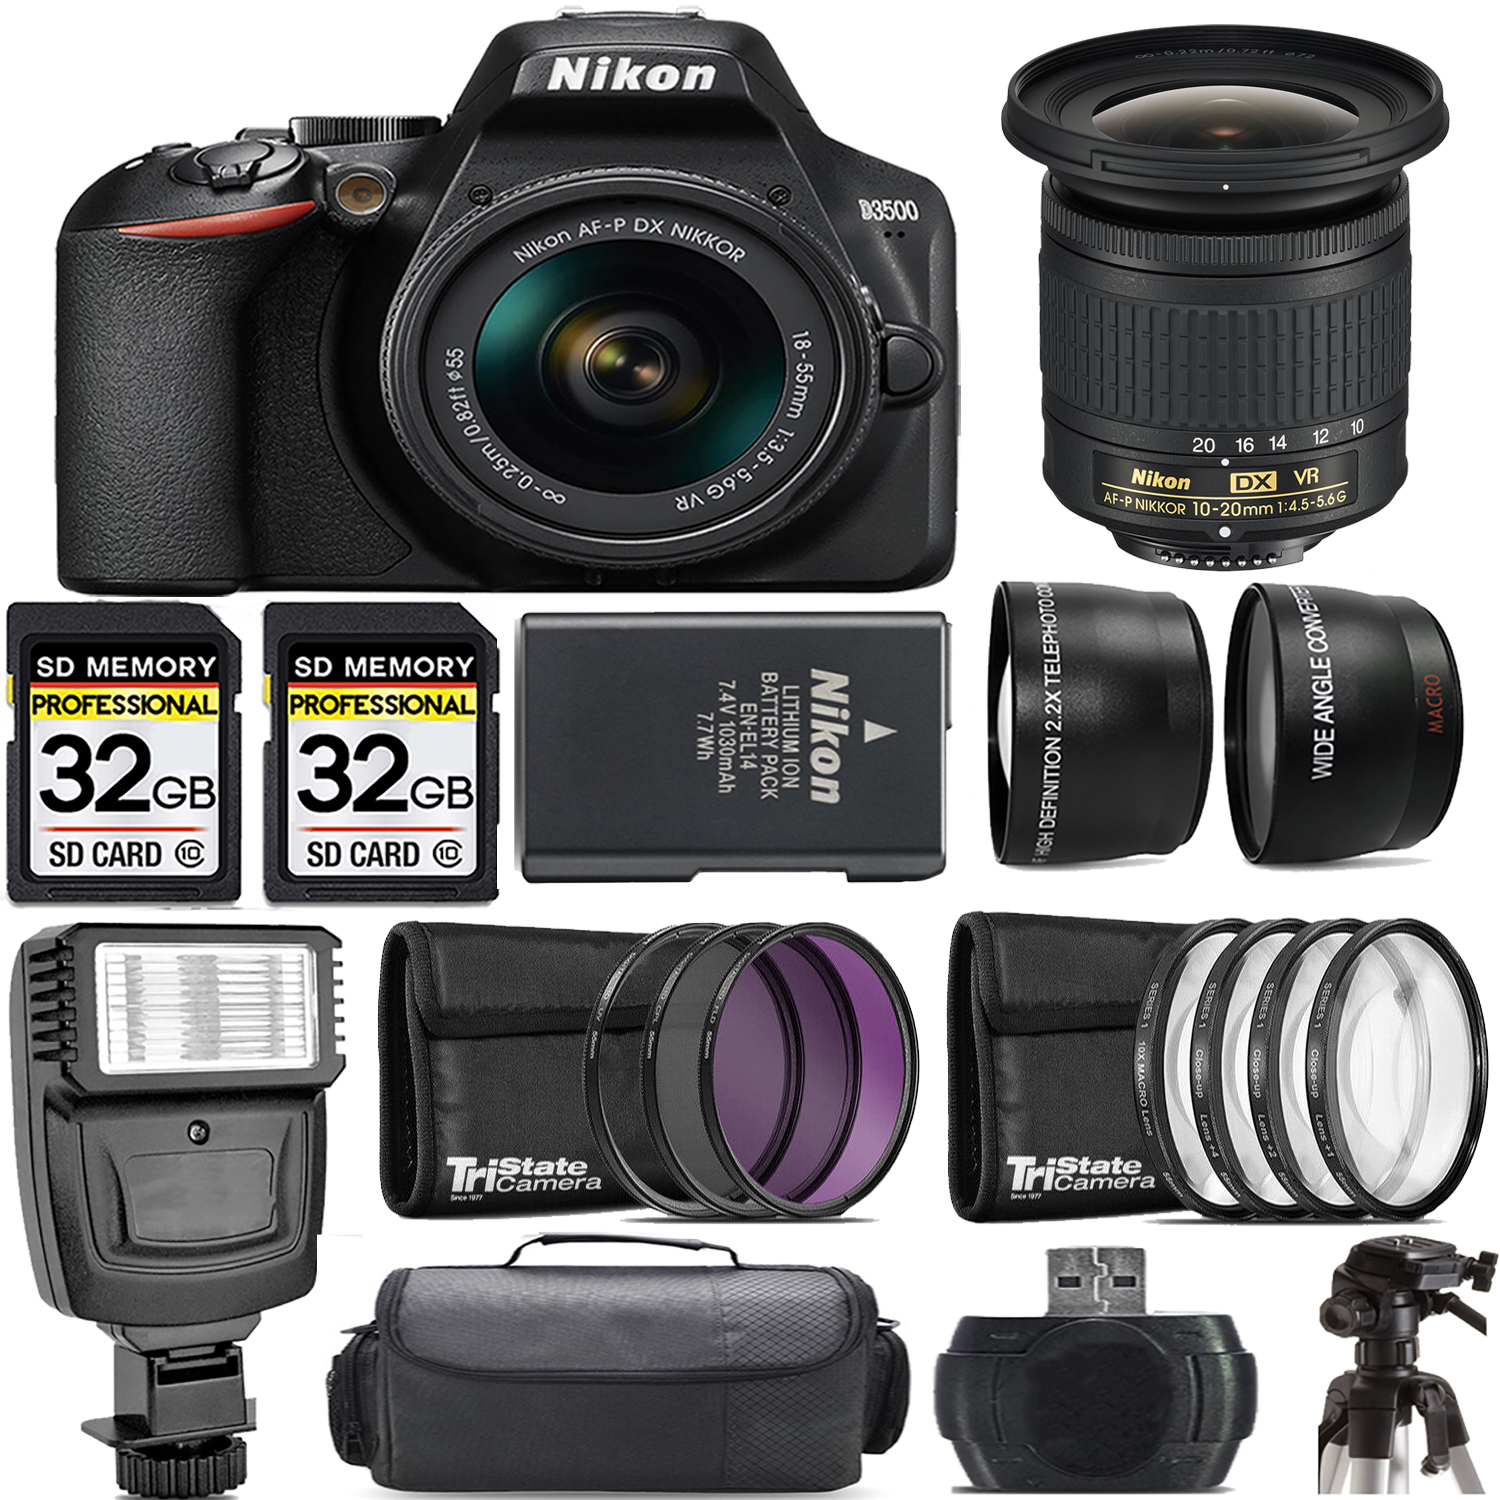 D3500 DSLR Camera with 18-55mm Lens + 10-20mm f/4.5-5.6G Lens + Flash - Kit *FREE SHIPPING*